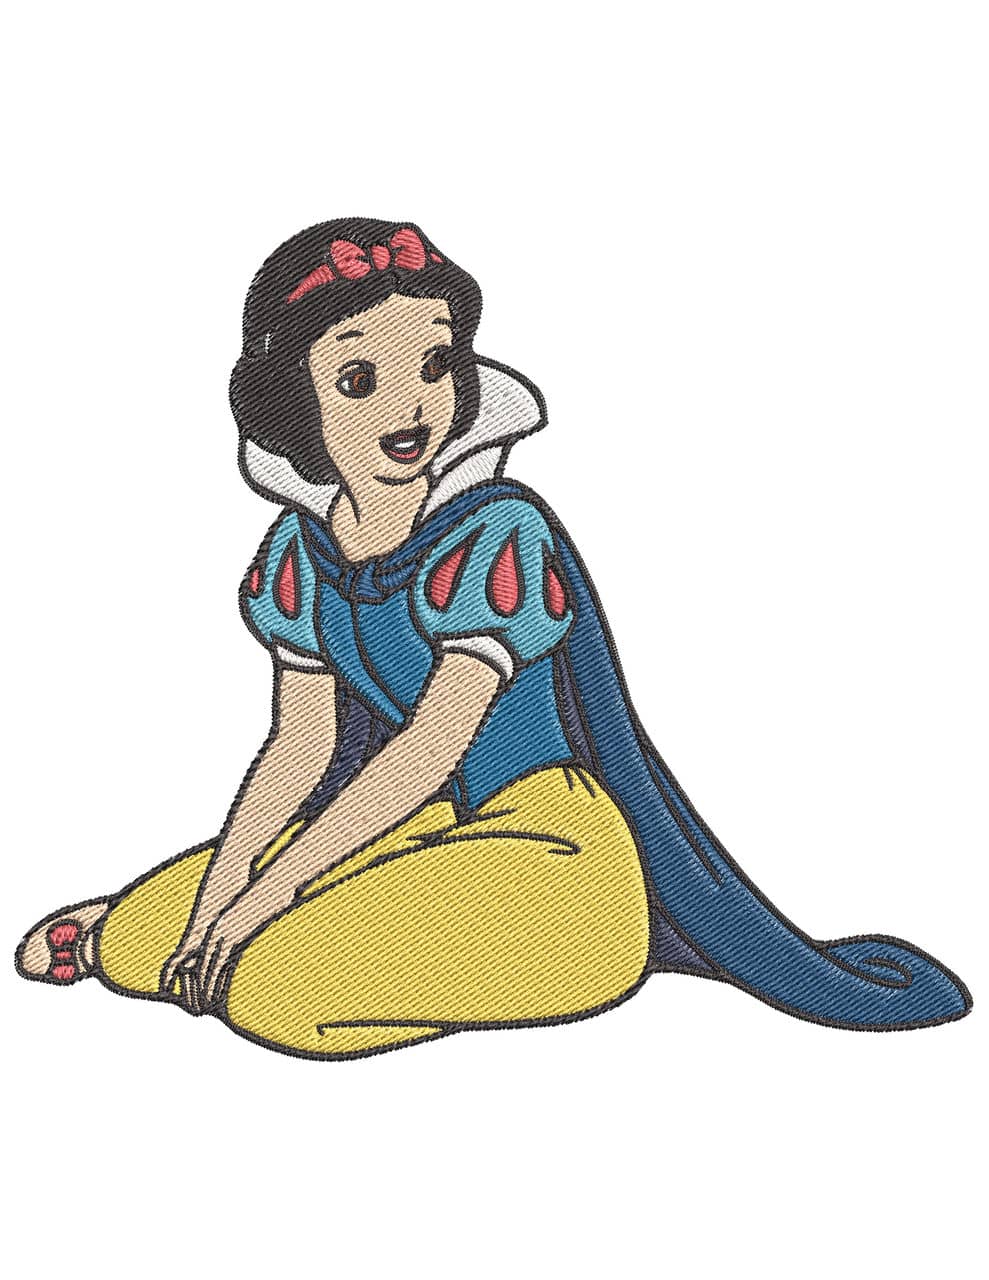 Snow White Princess Disney Seven Dwarfs Embroidery Design 07 Digital Embroidery Designs 